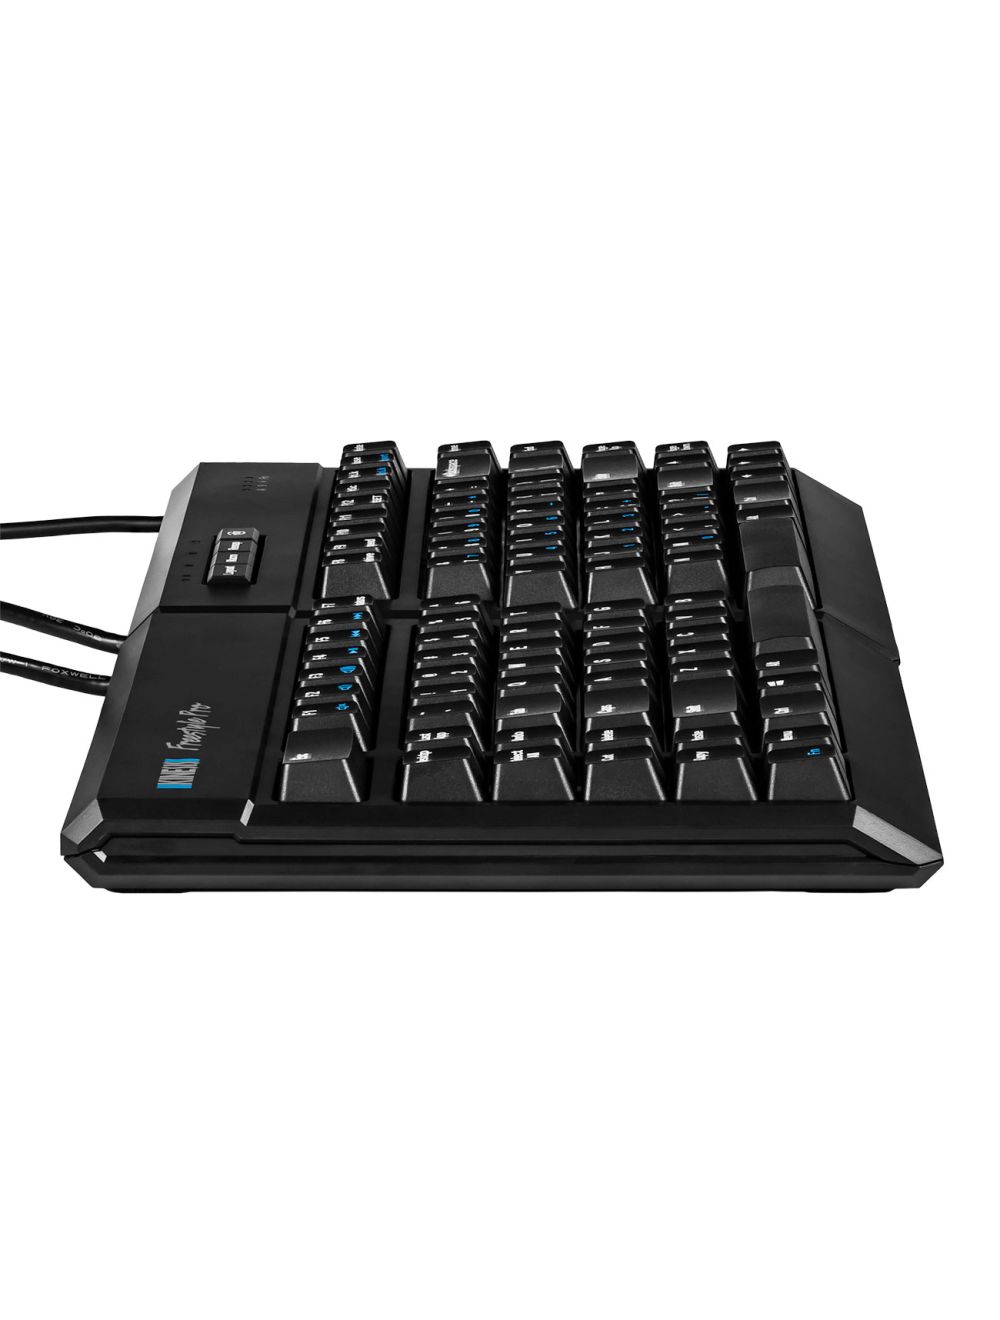 Ergonomic Keyboard Kinesis Freestyle Pro